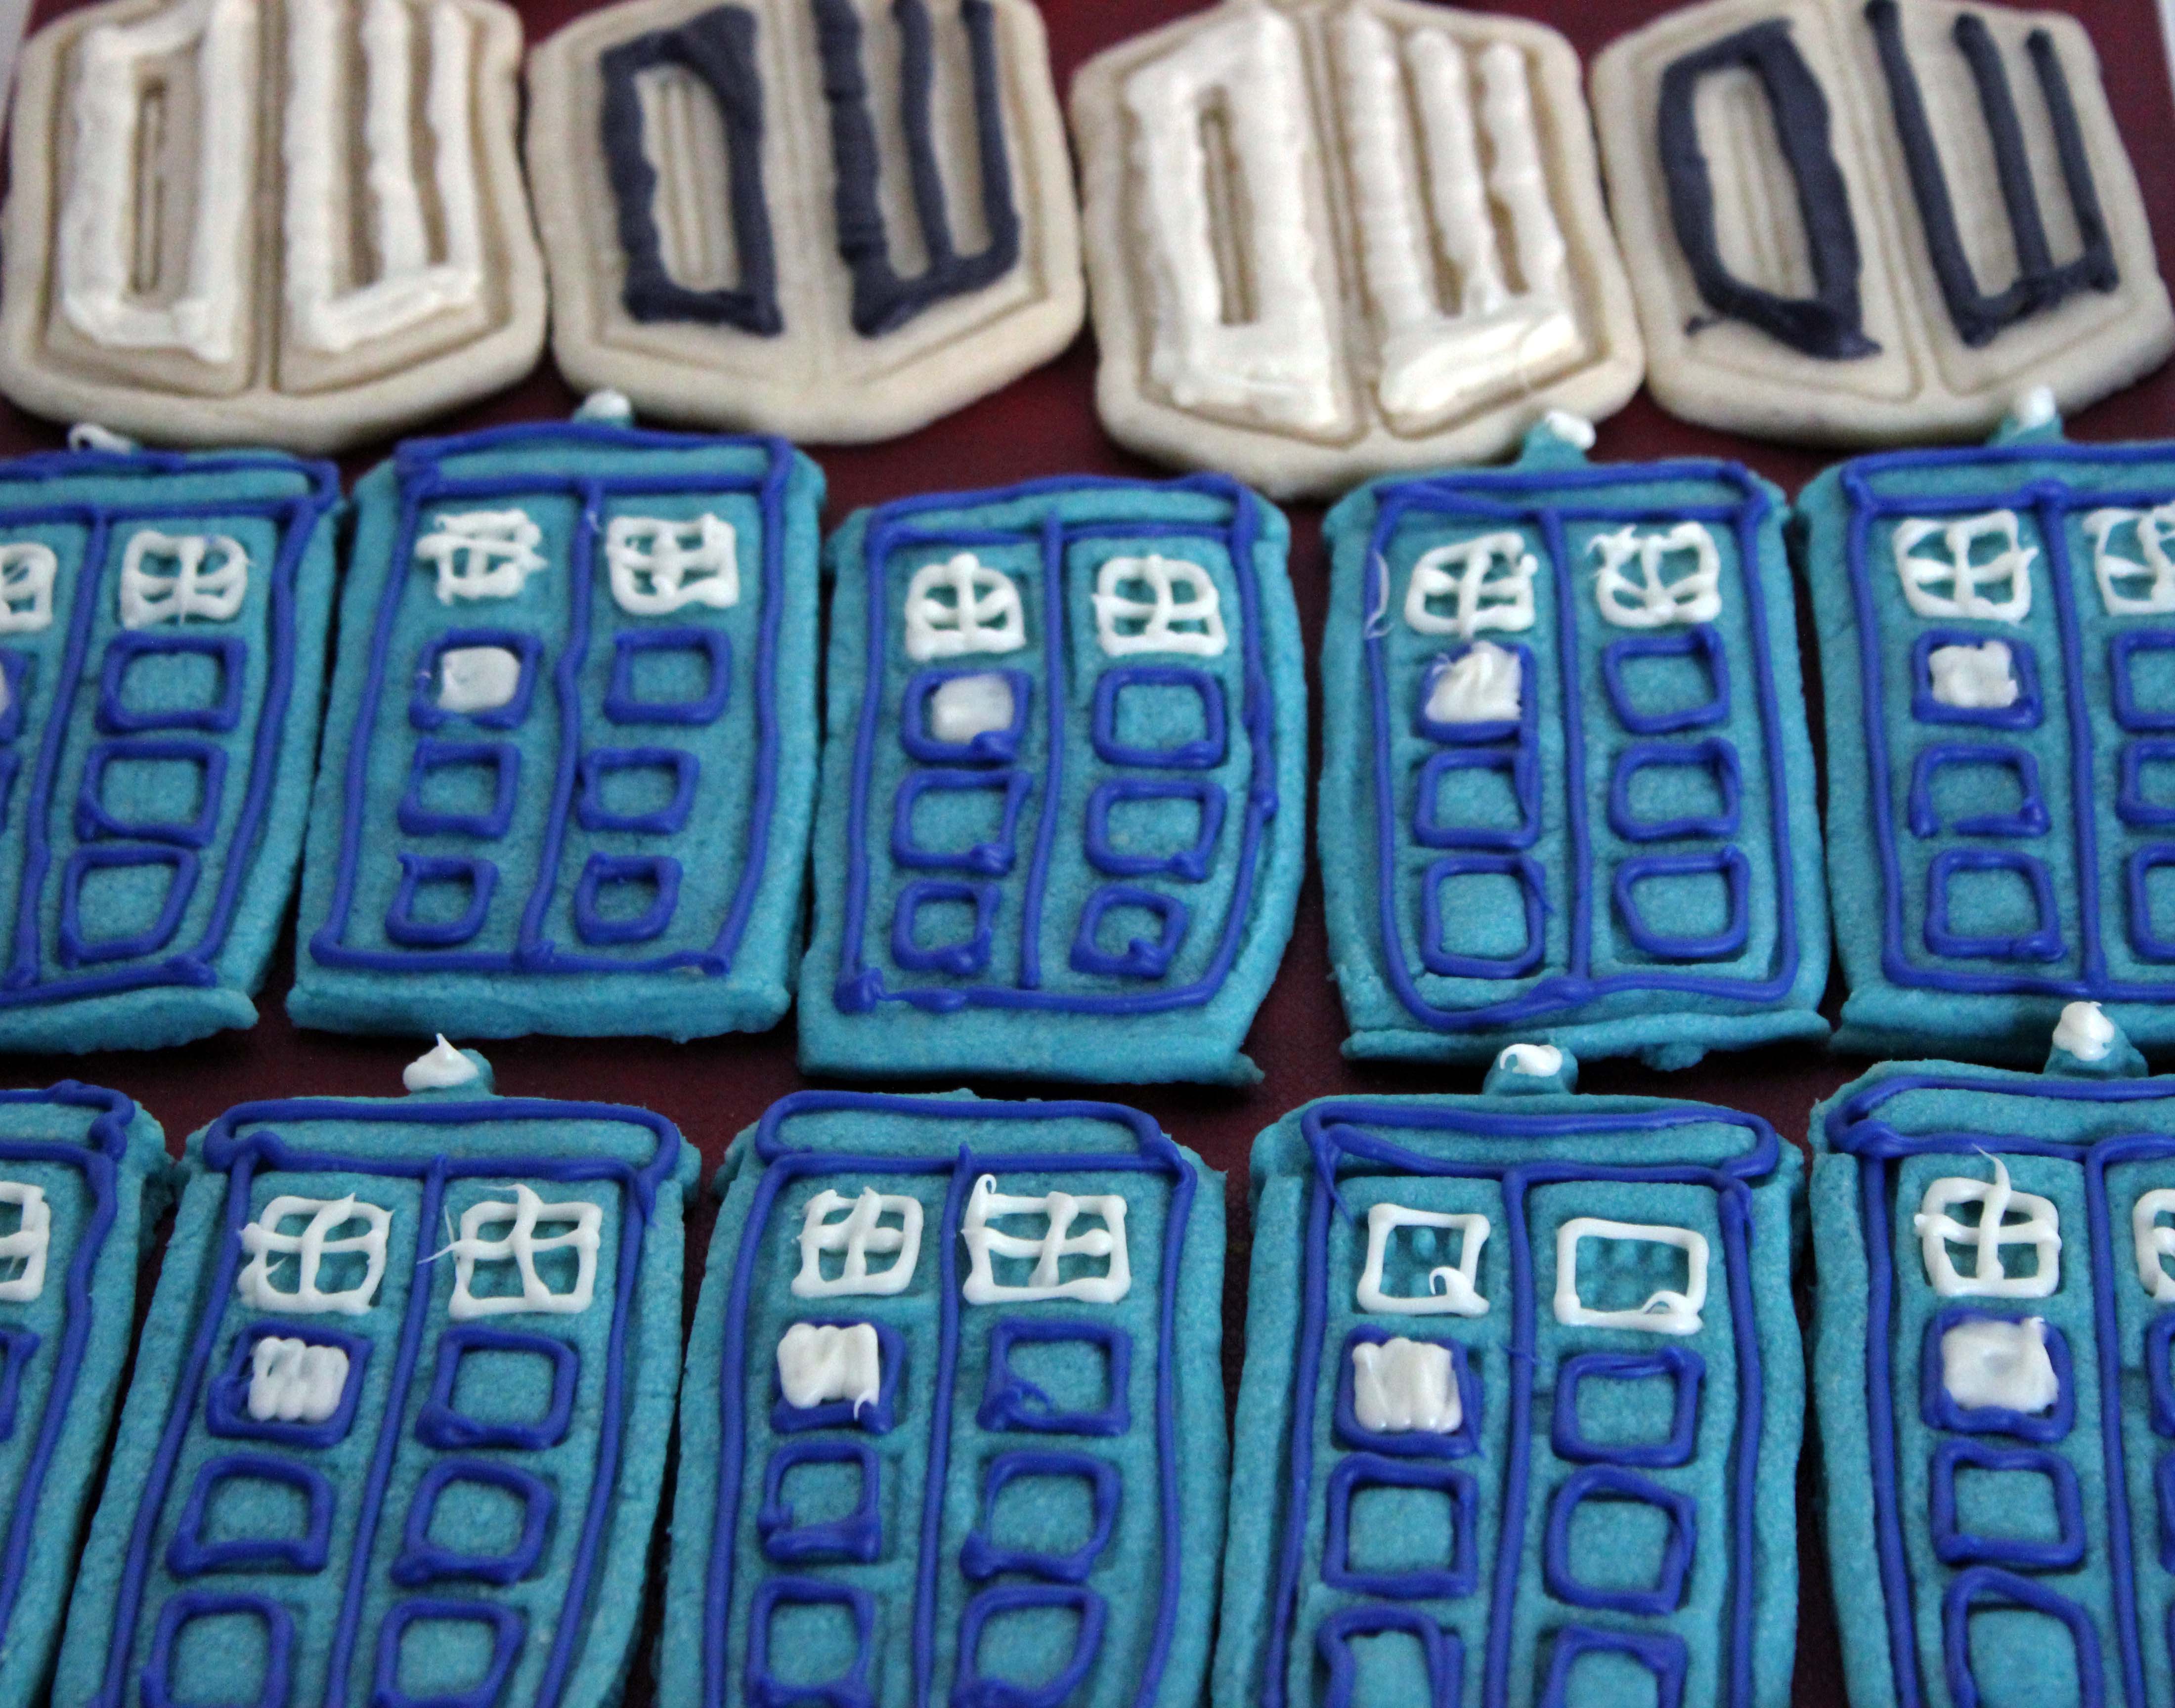 Tardis and logo cookies Photo by Alfonso Huerta